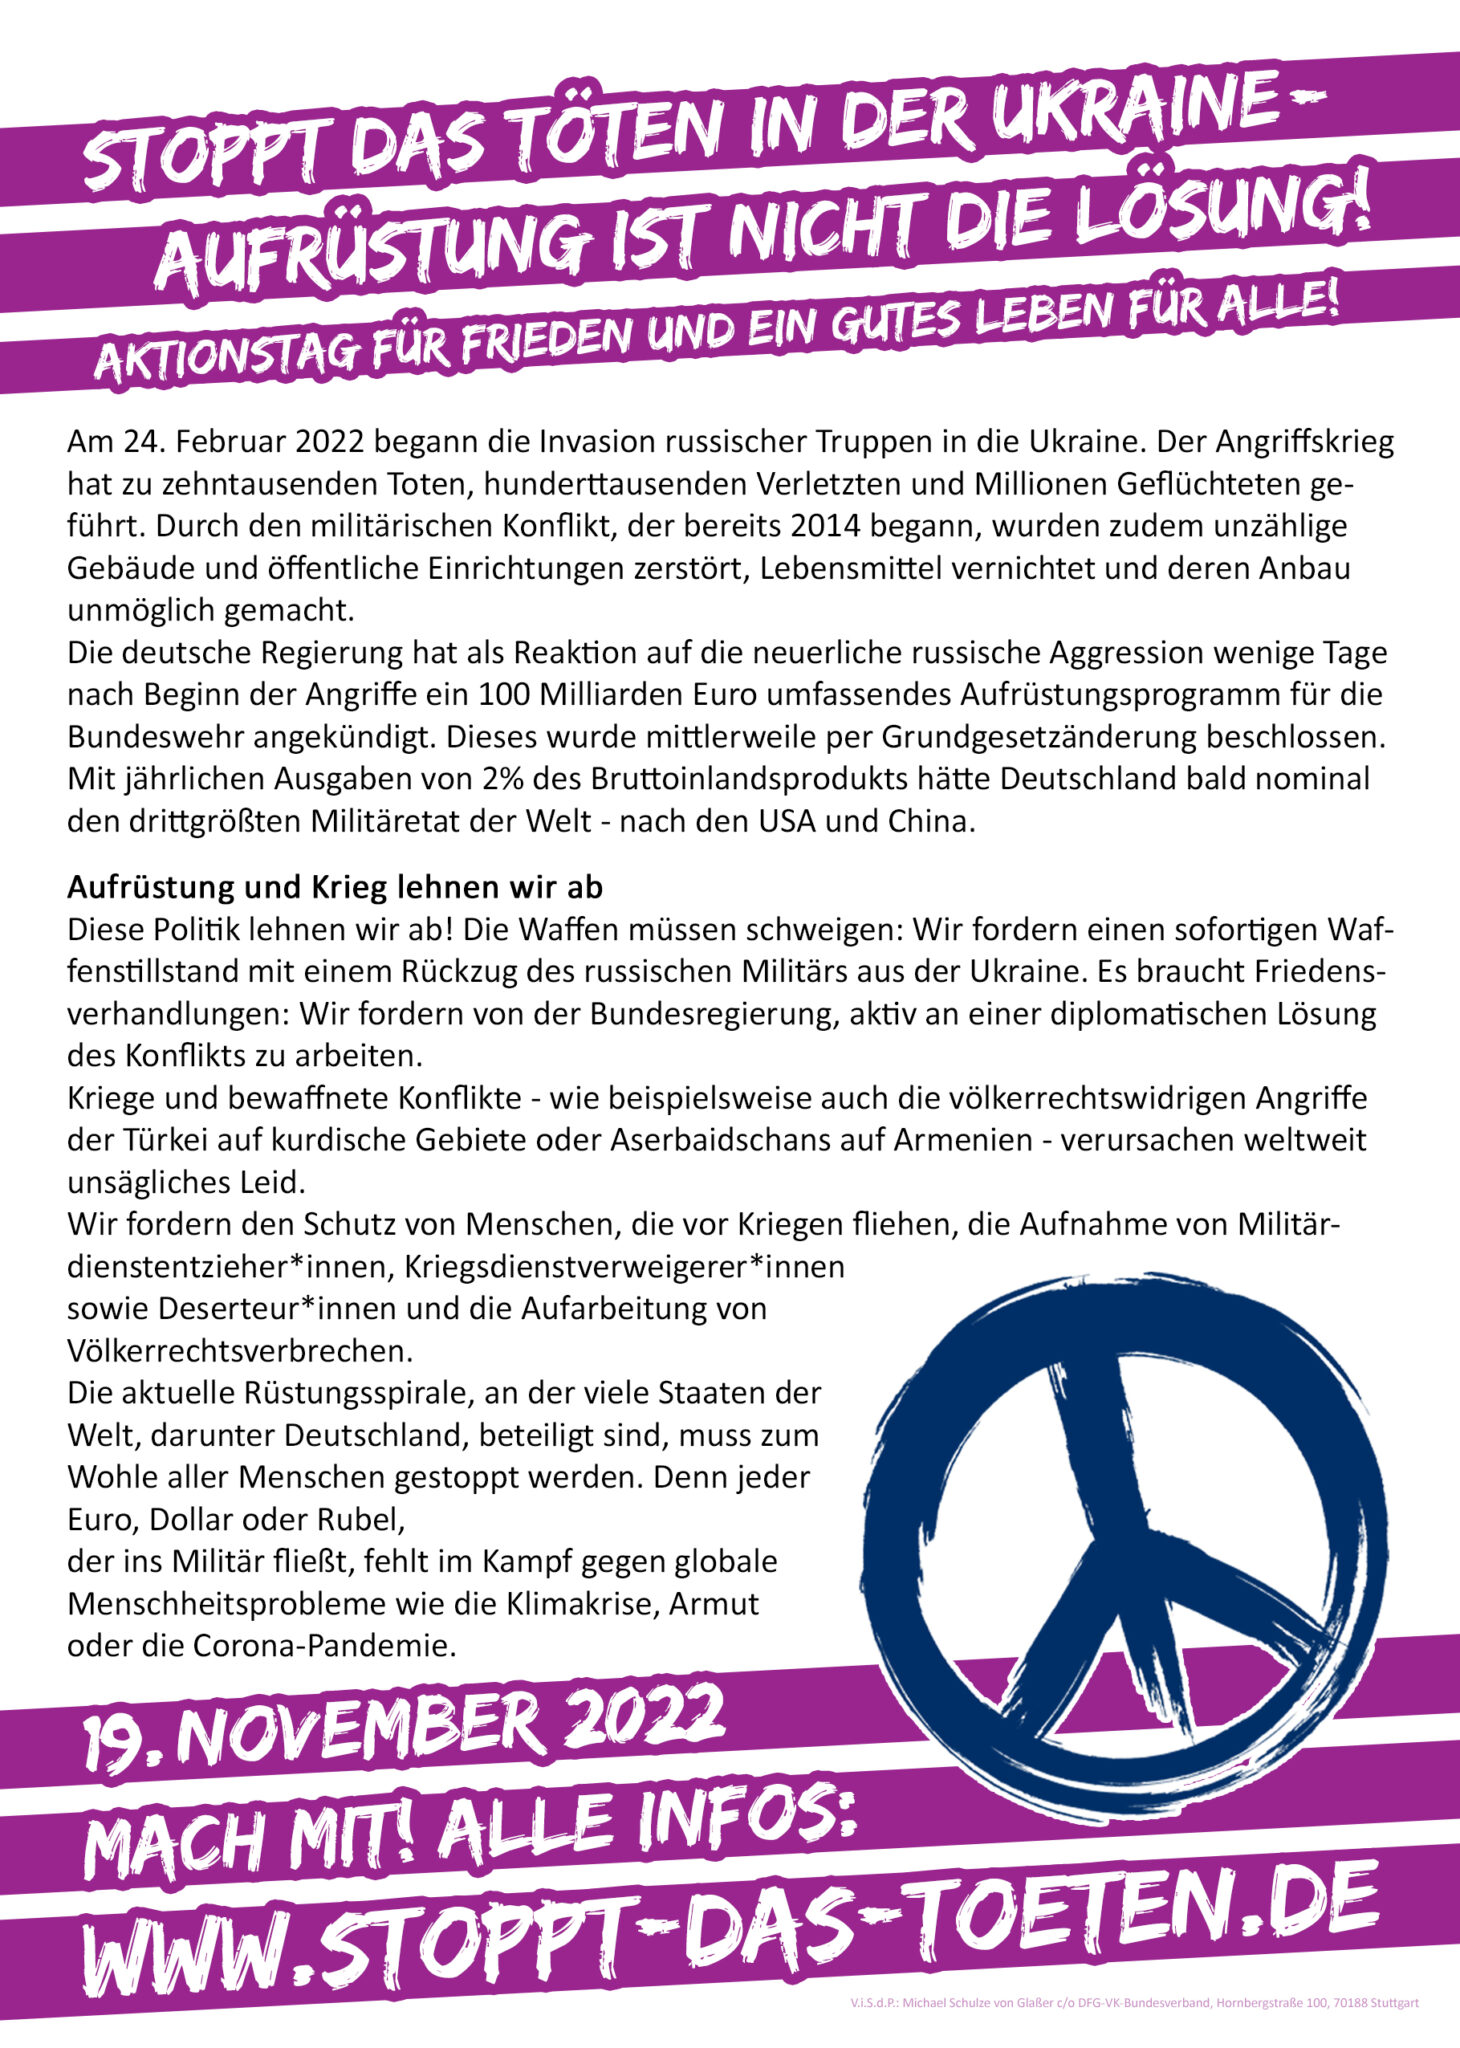 Samstag, 19. November 2022 Aktionstag-Aufruf